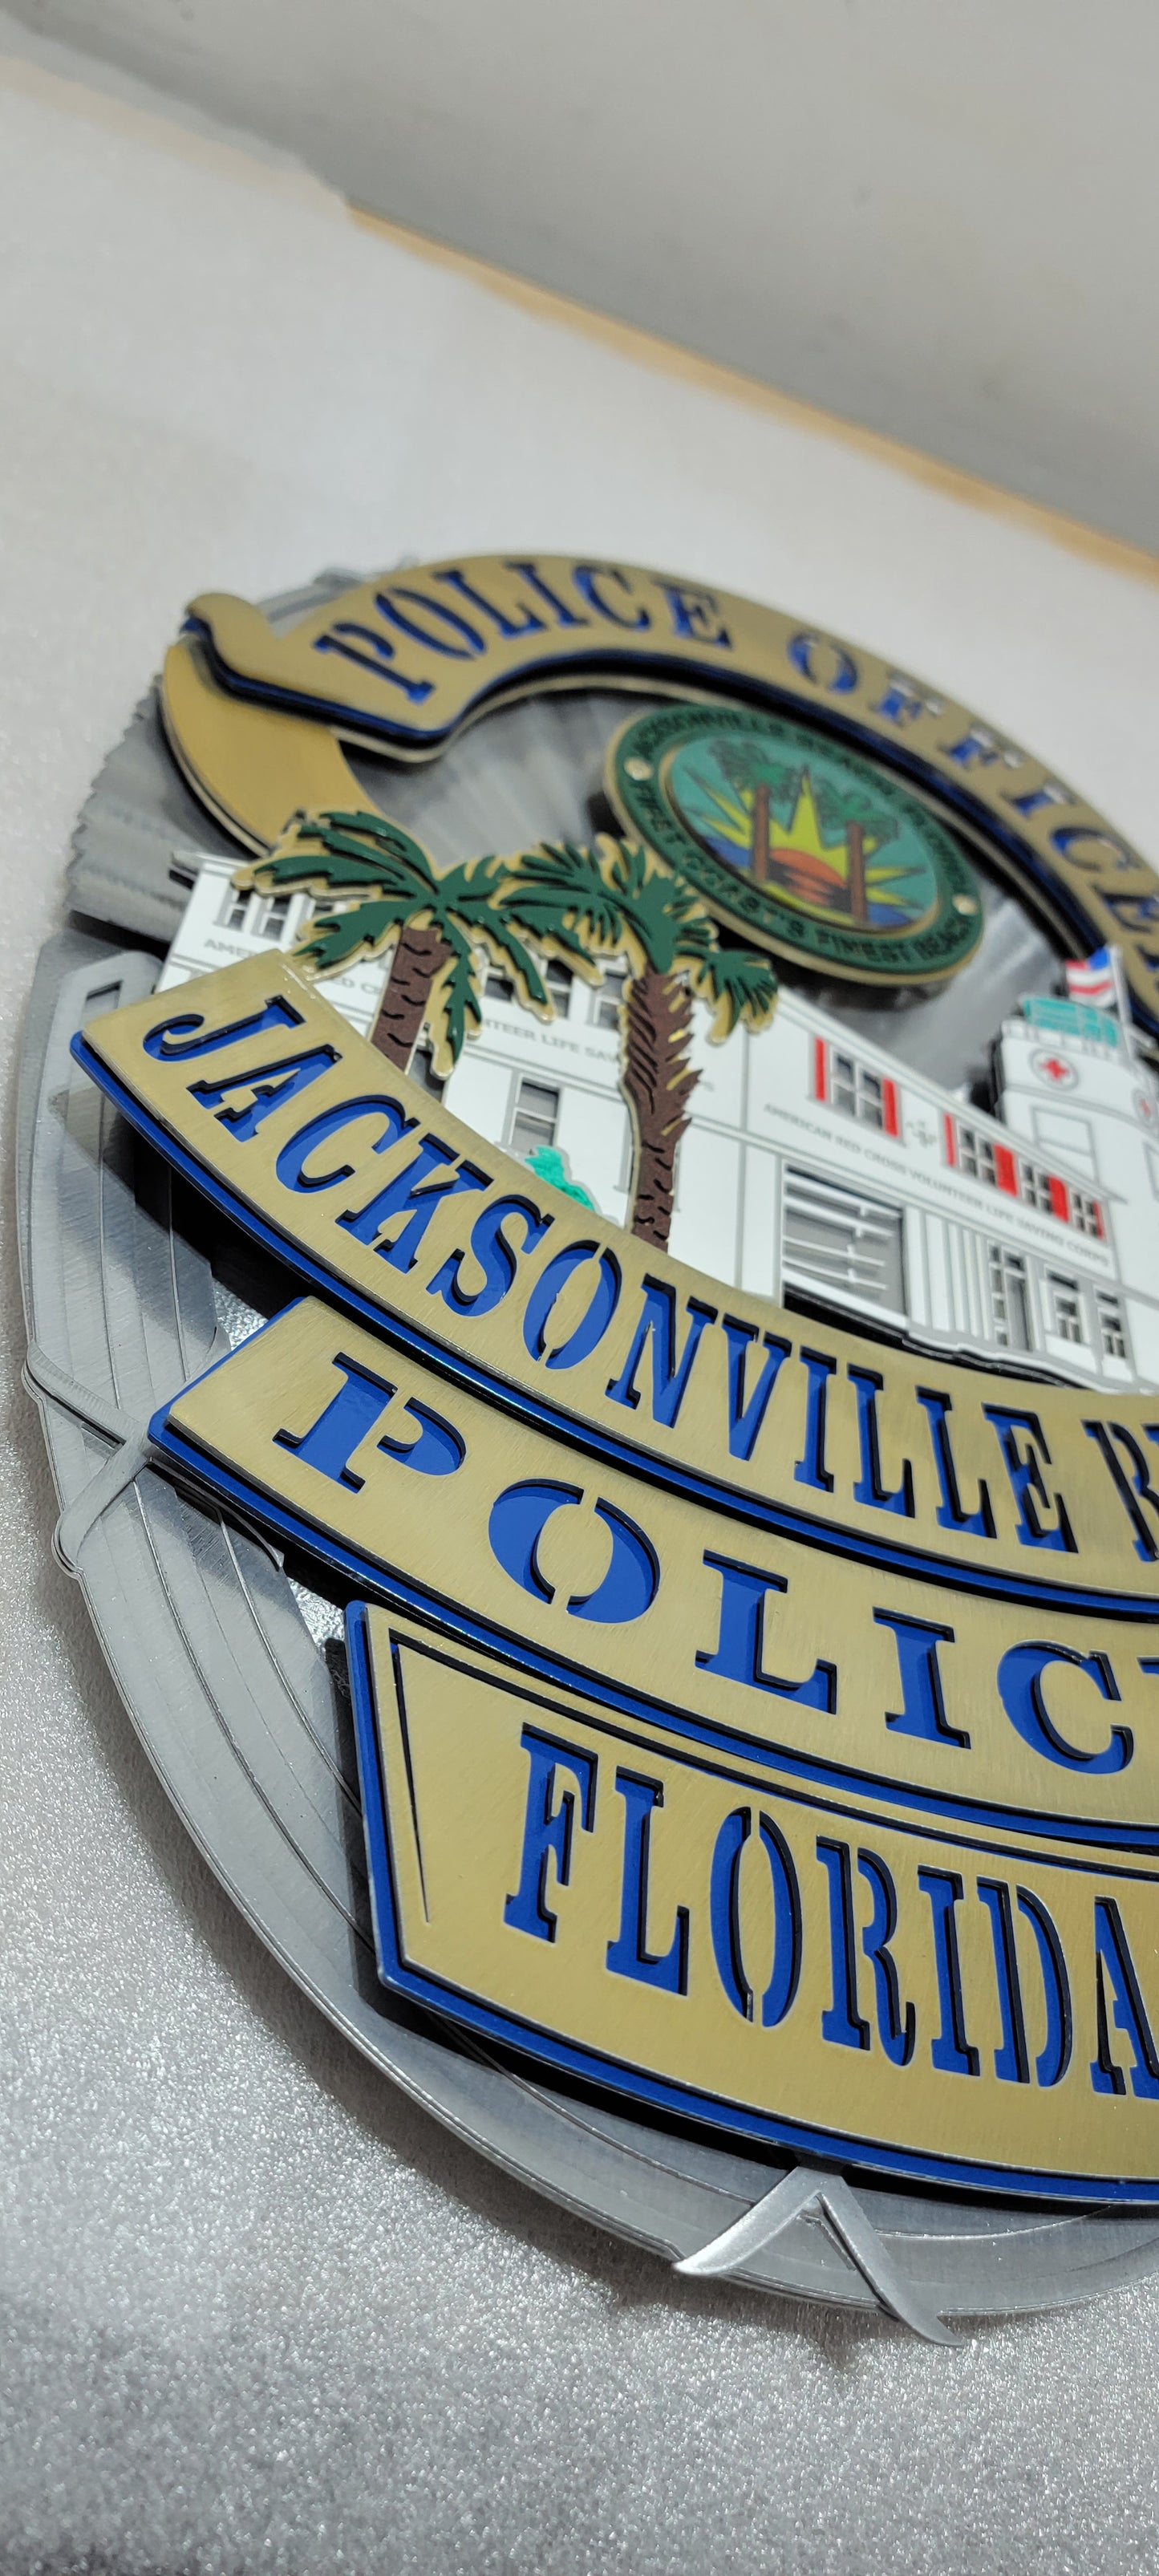 Florida Jacksonville Beach Police Badge